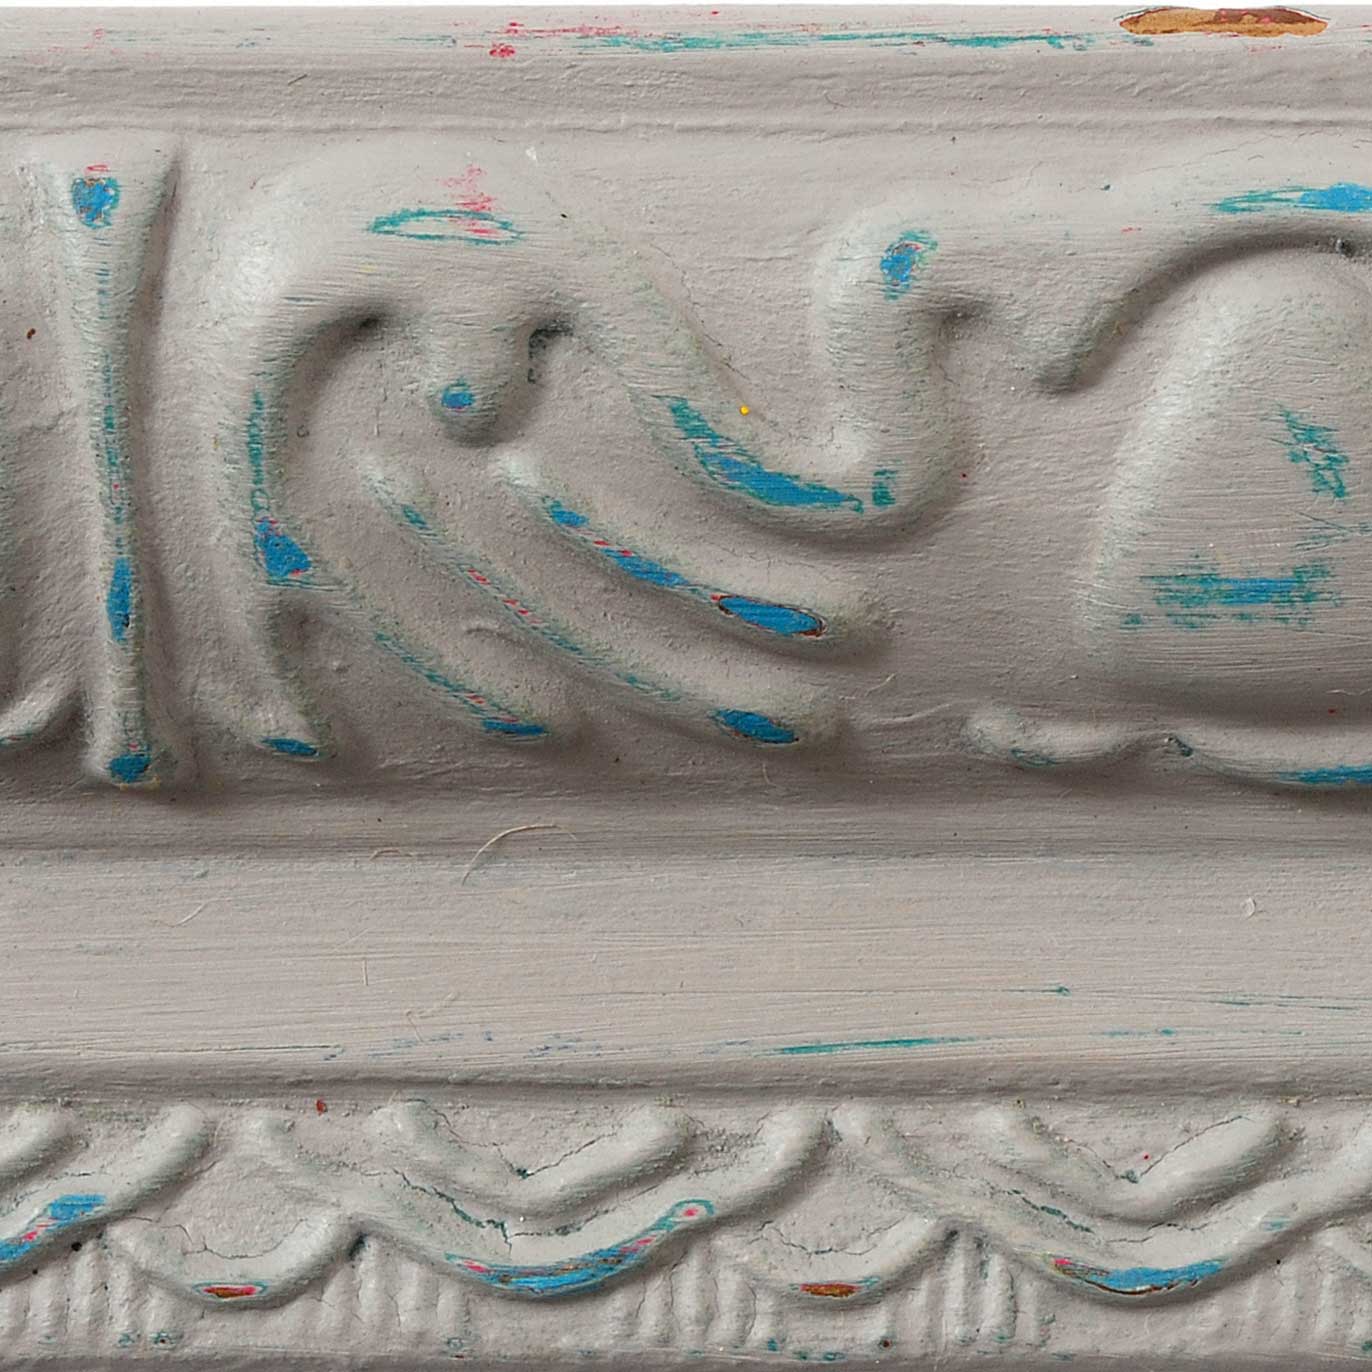 FolkArt Home Decor Chalk - Parisian Gray, 2 oz. - 6358